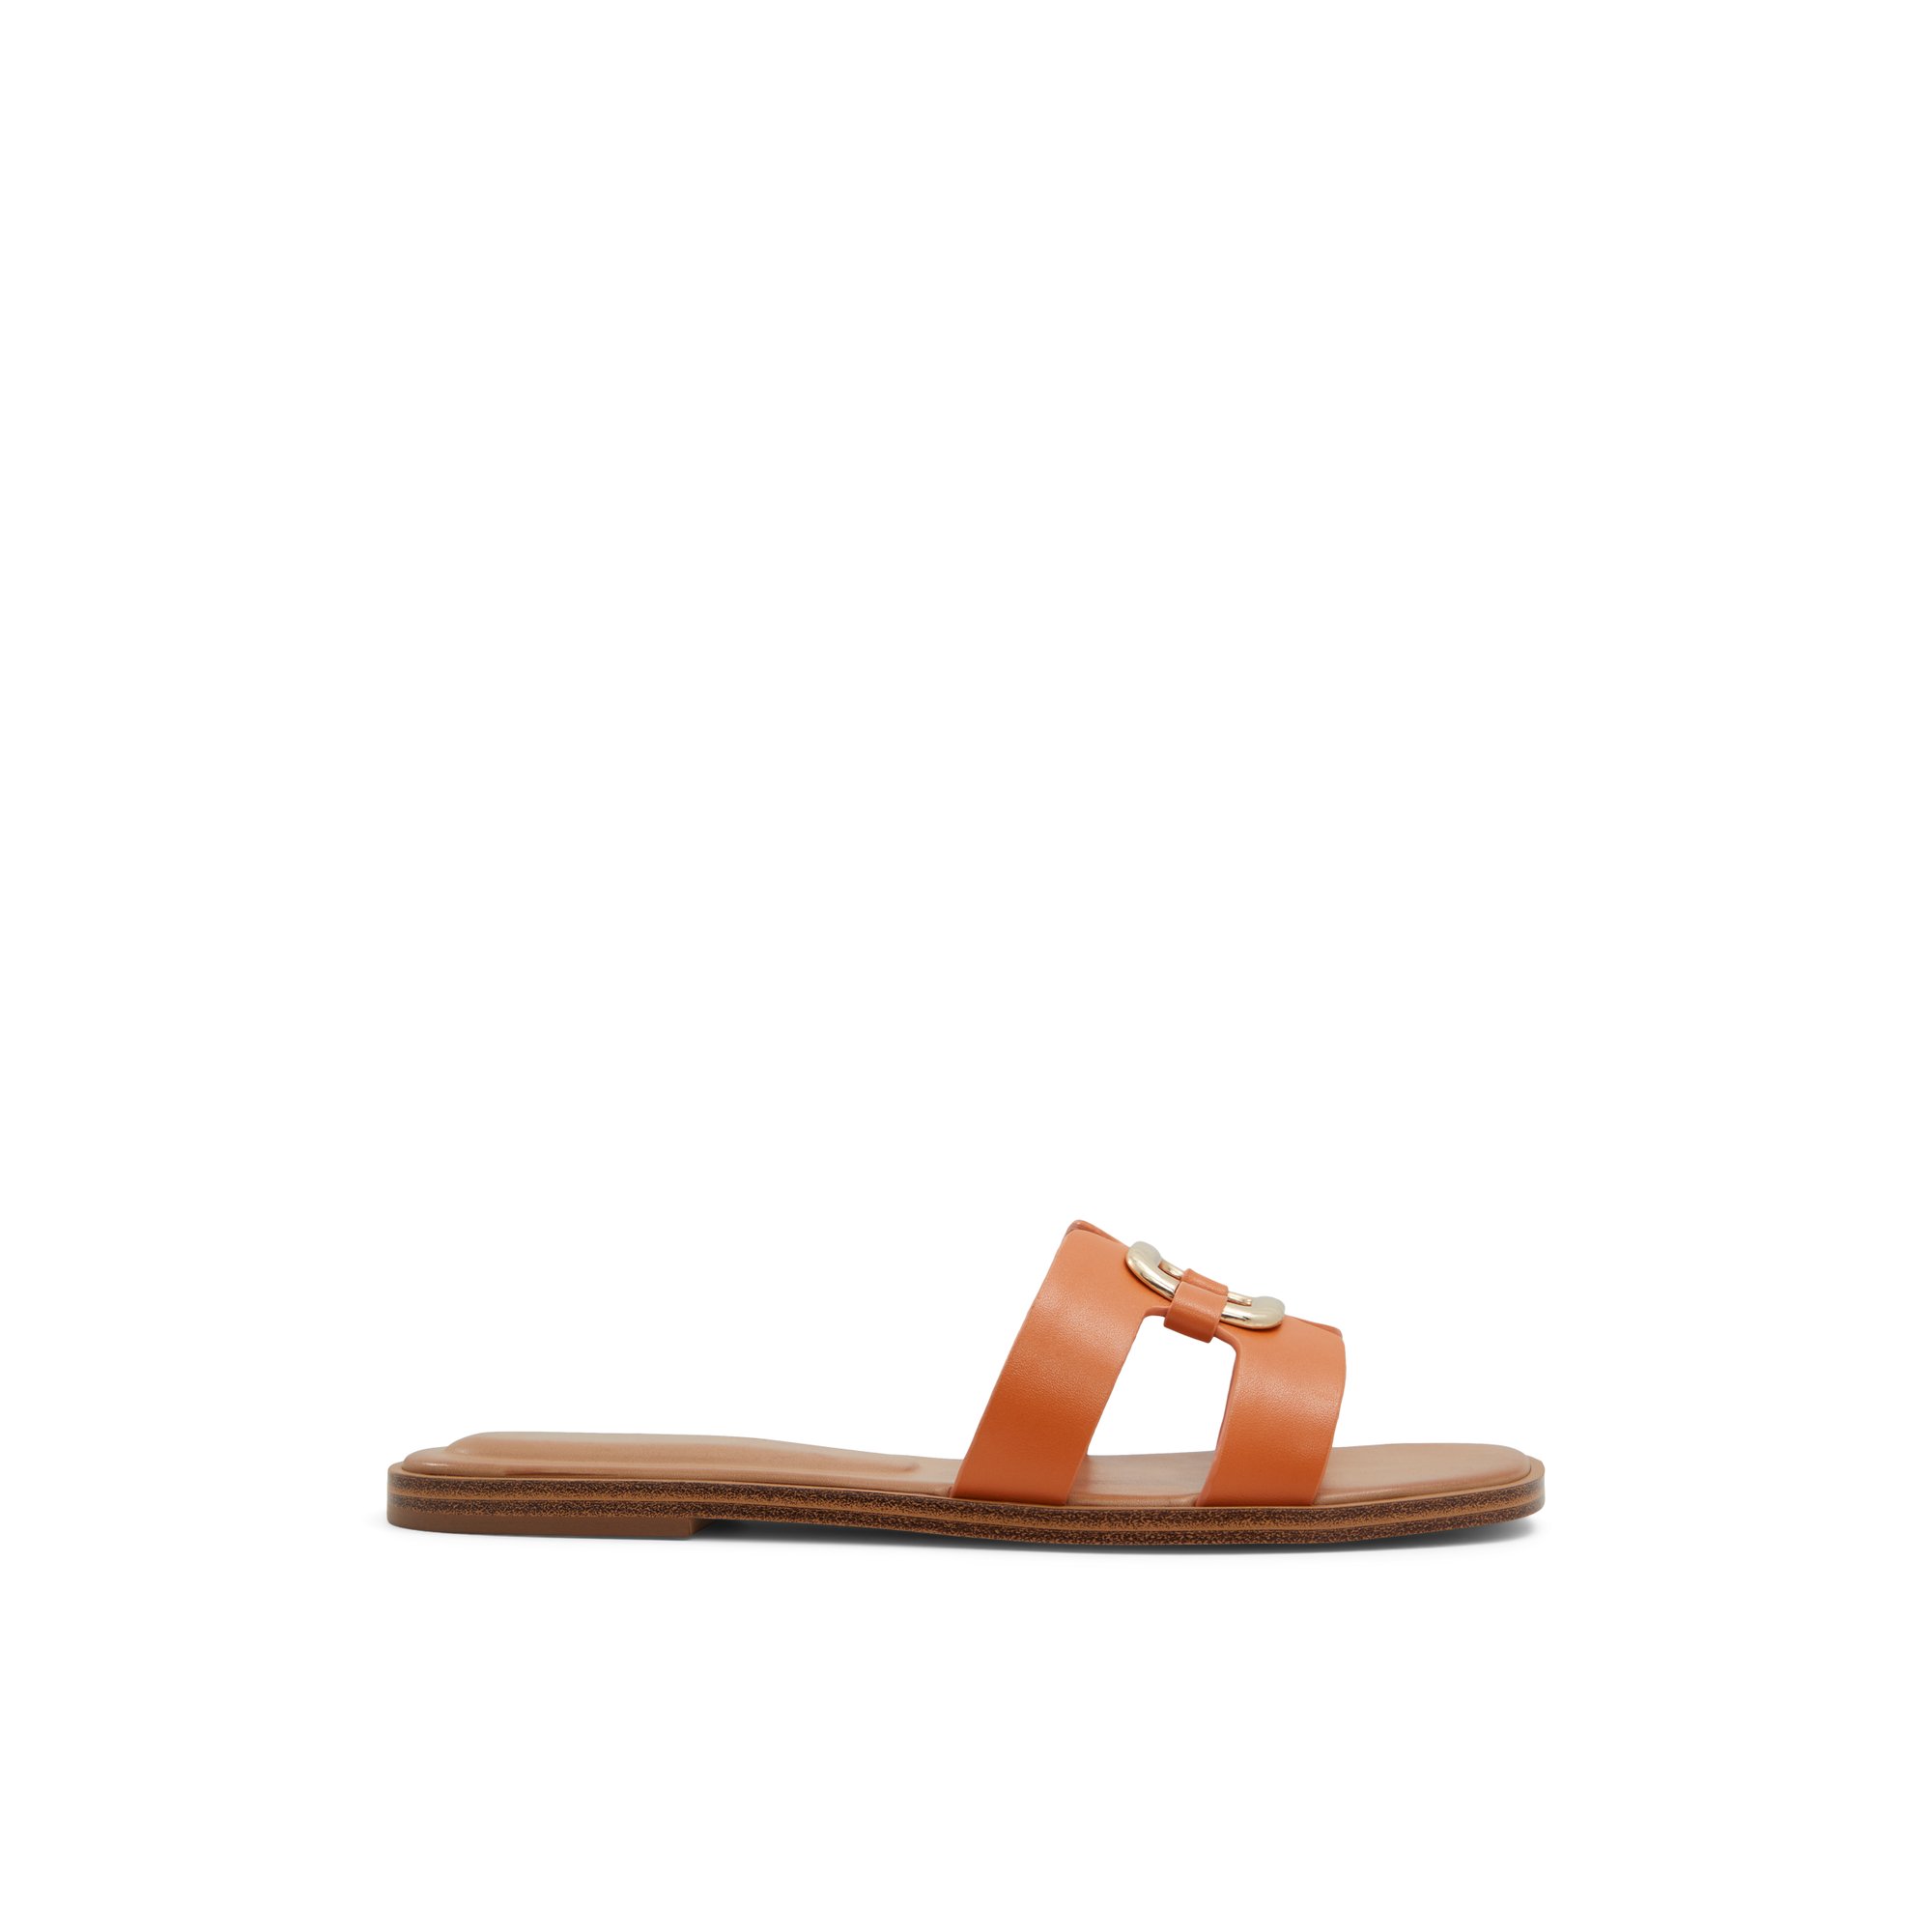 ALDO Nydaokin - Women's Sandals Flats - Orange